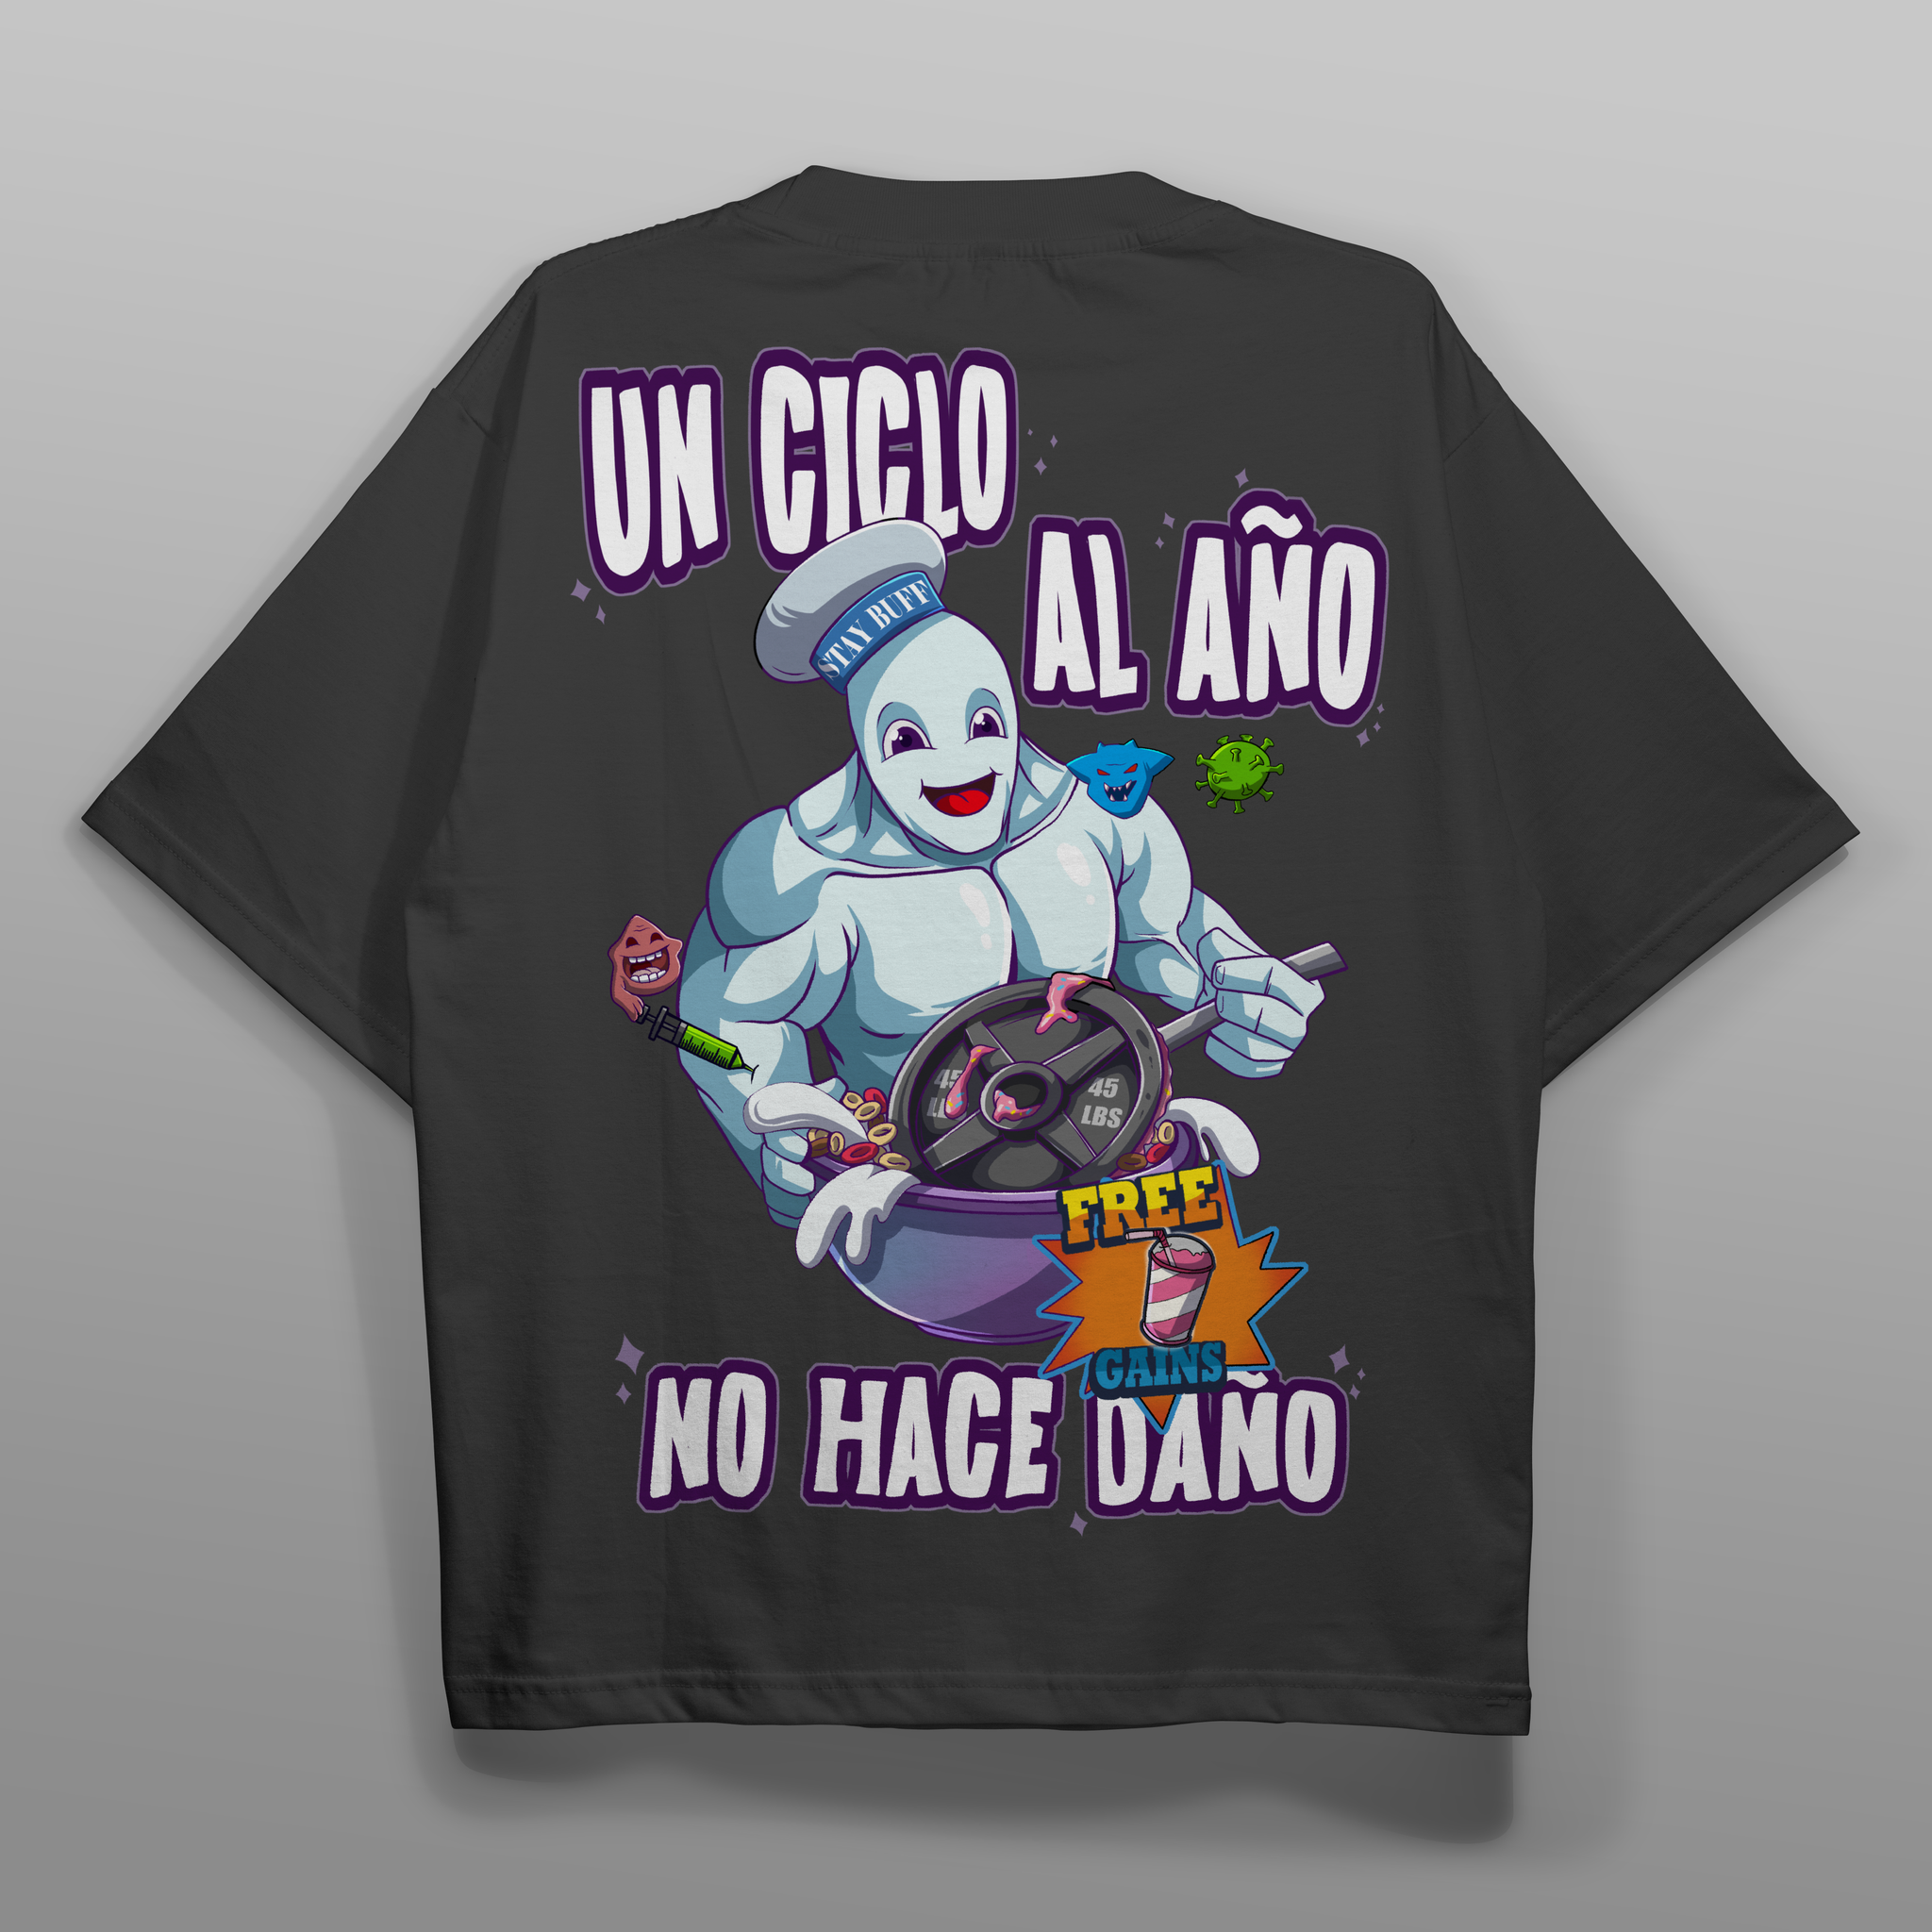 Camiseta Hombre Gym-Rat básica By StreetVogue